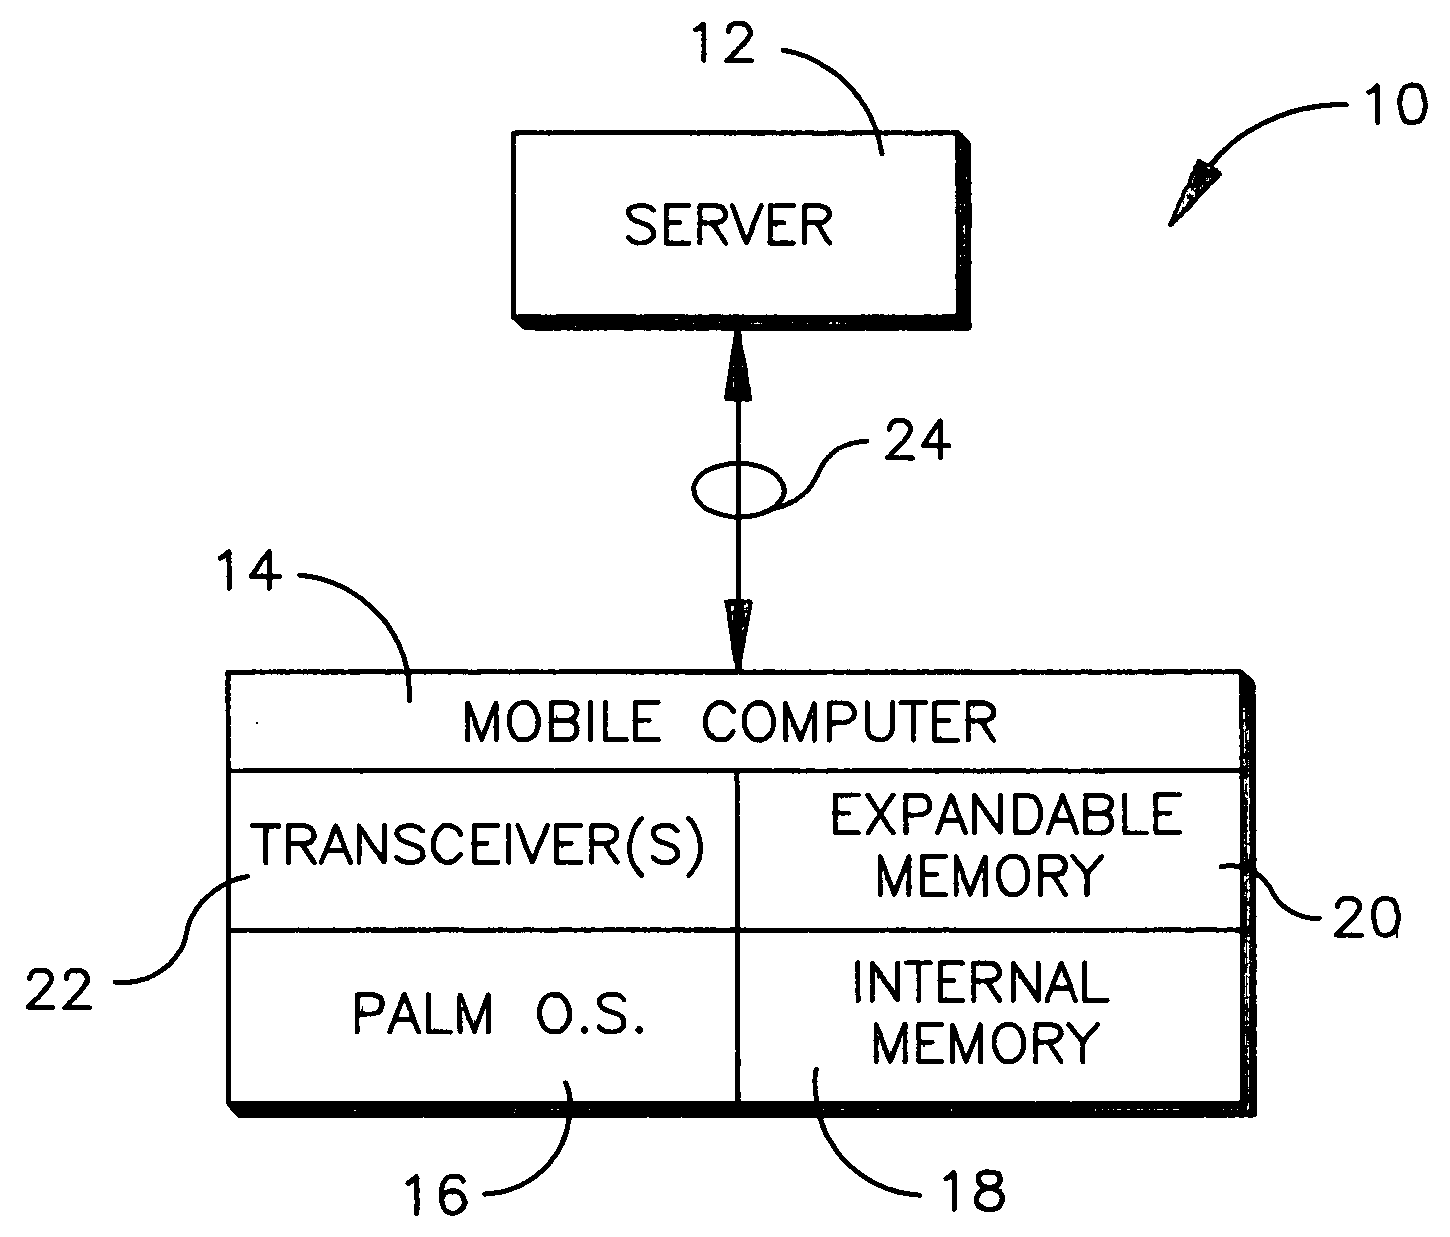 File transfer protocol for mobile computer